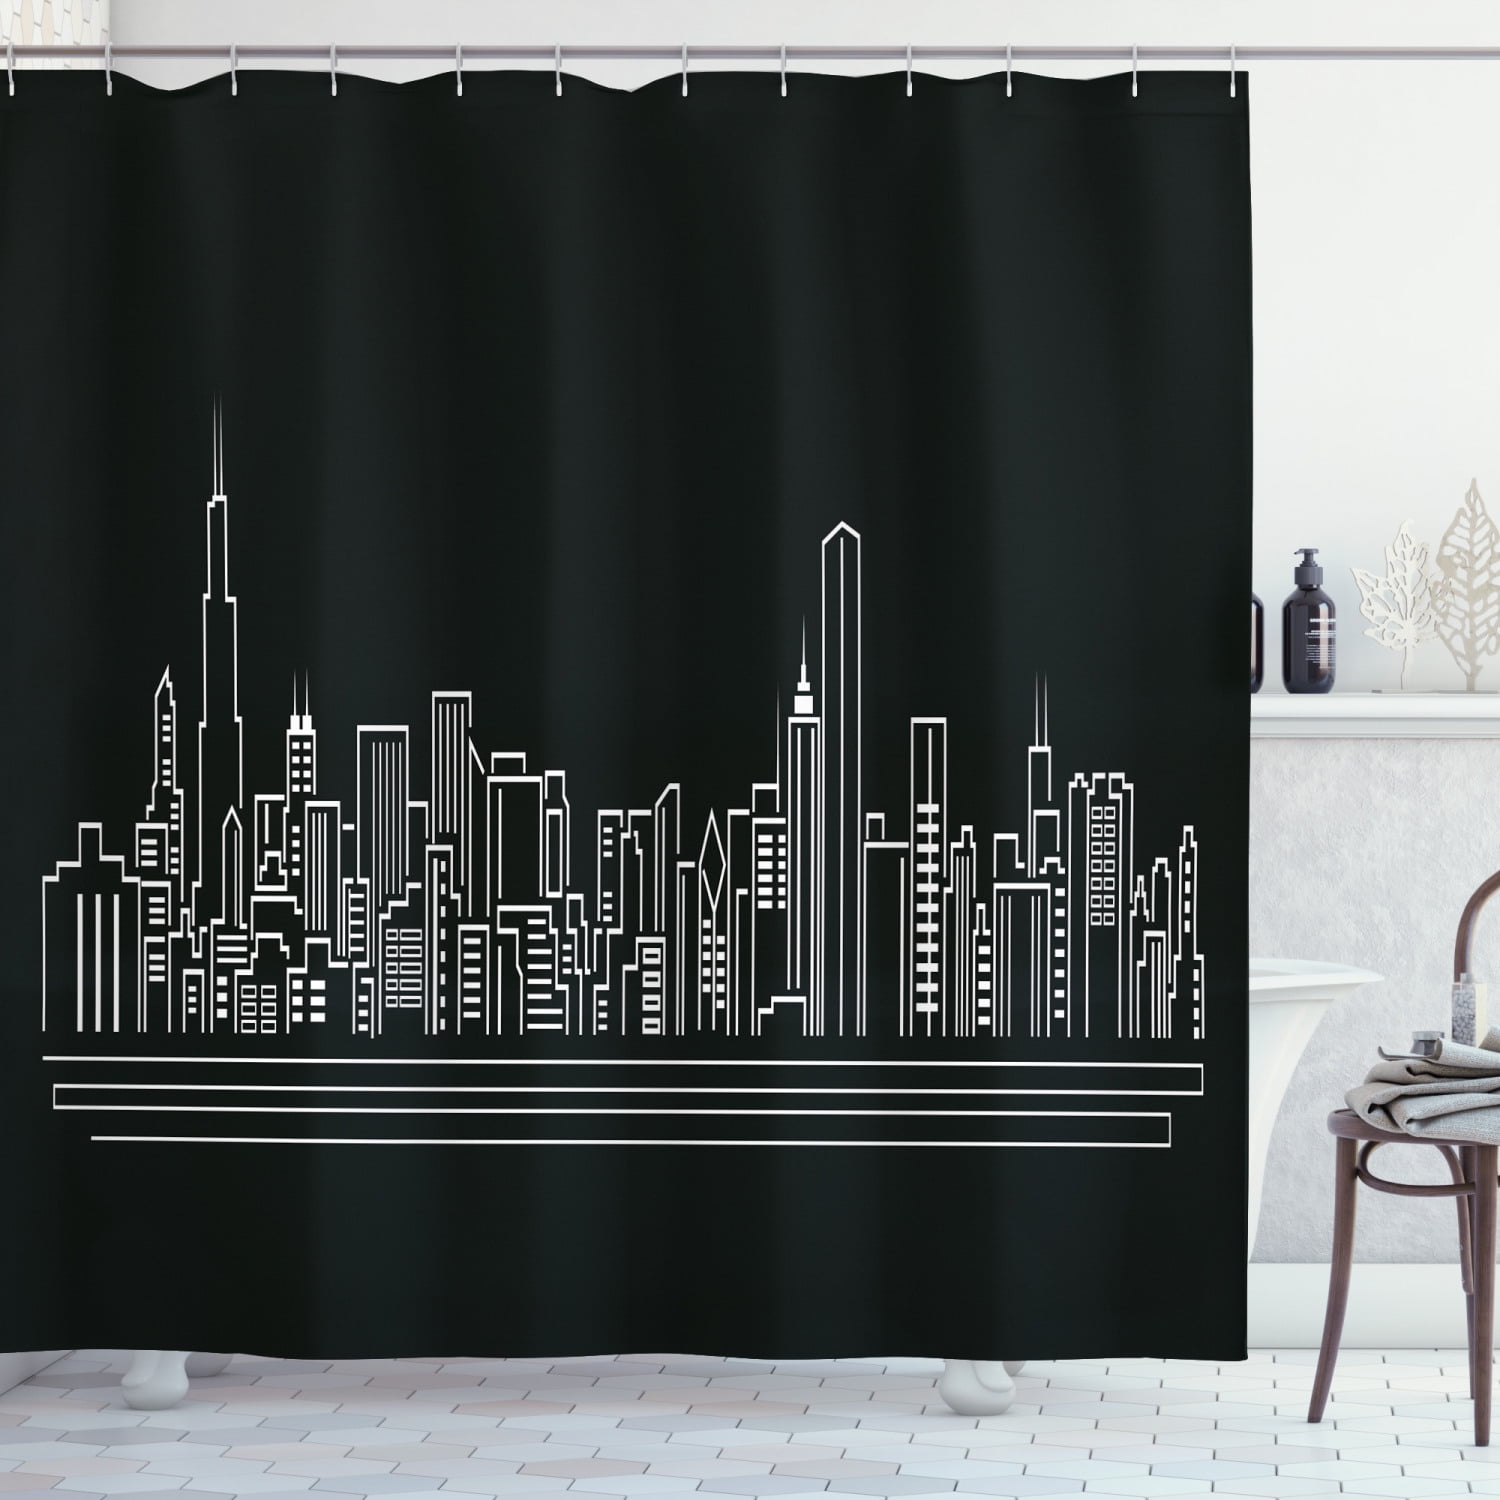 Chicago Skyline Shower Curtain Fabric Bathroom Decor Set with Hooks 4 Sizes 